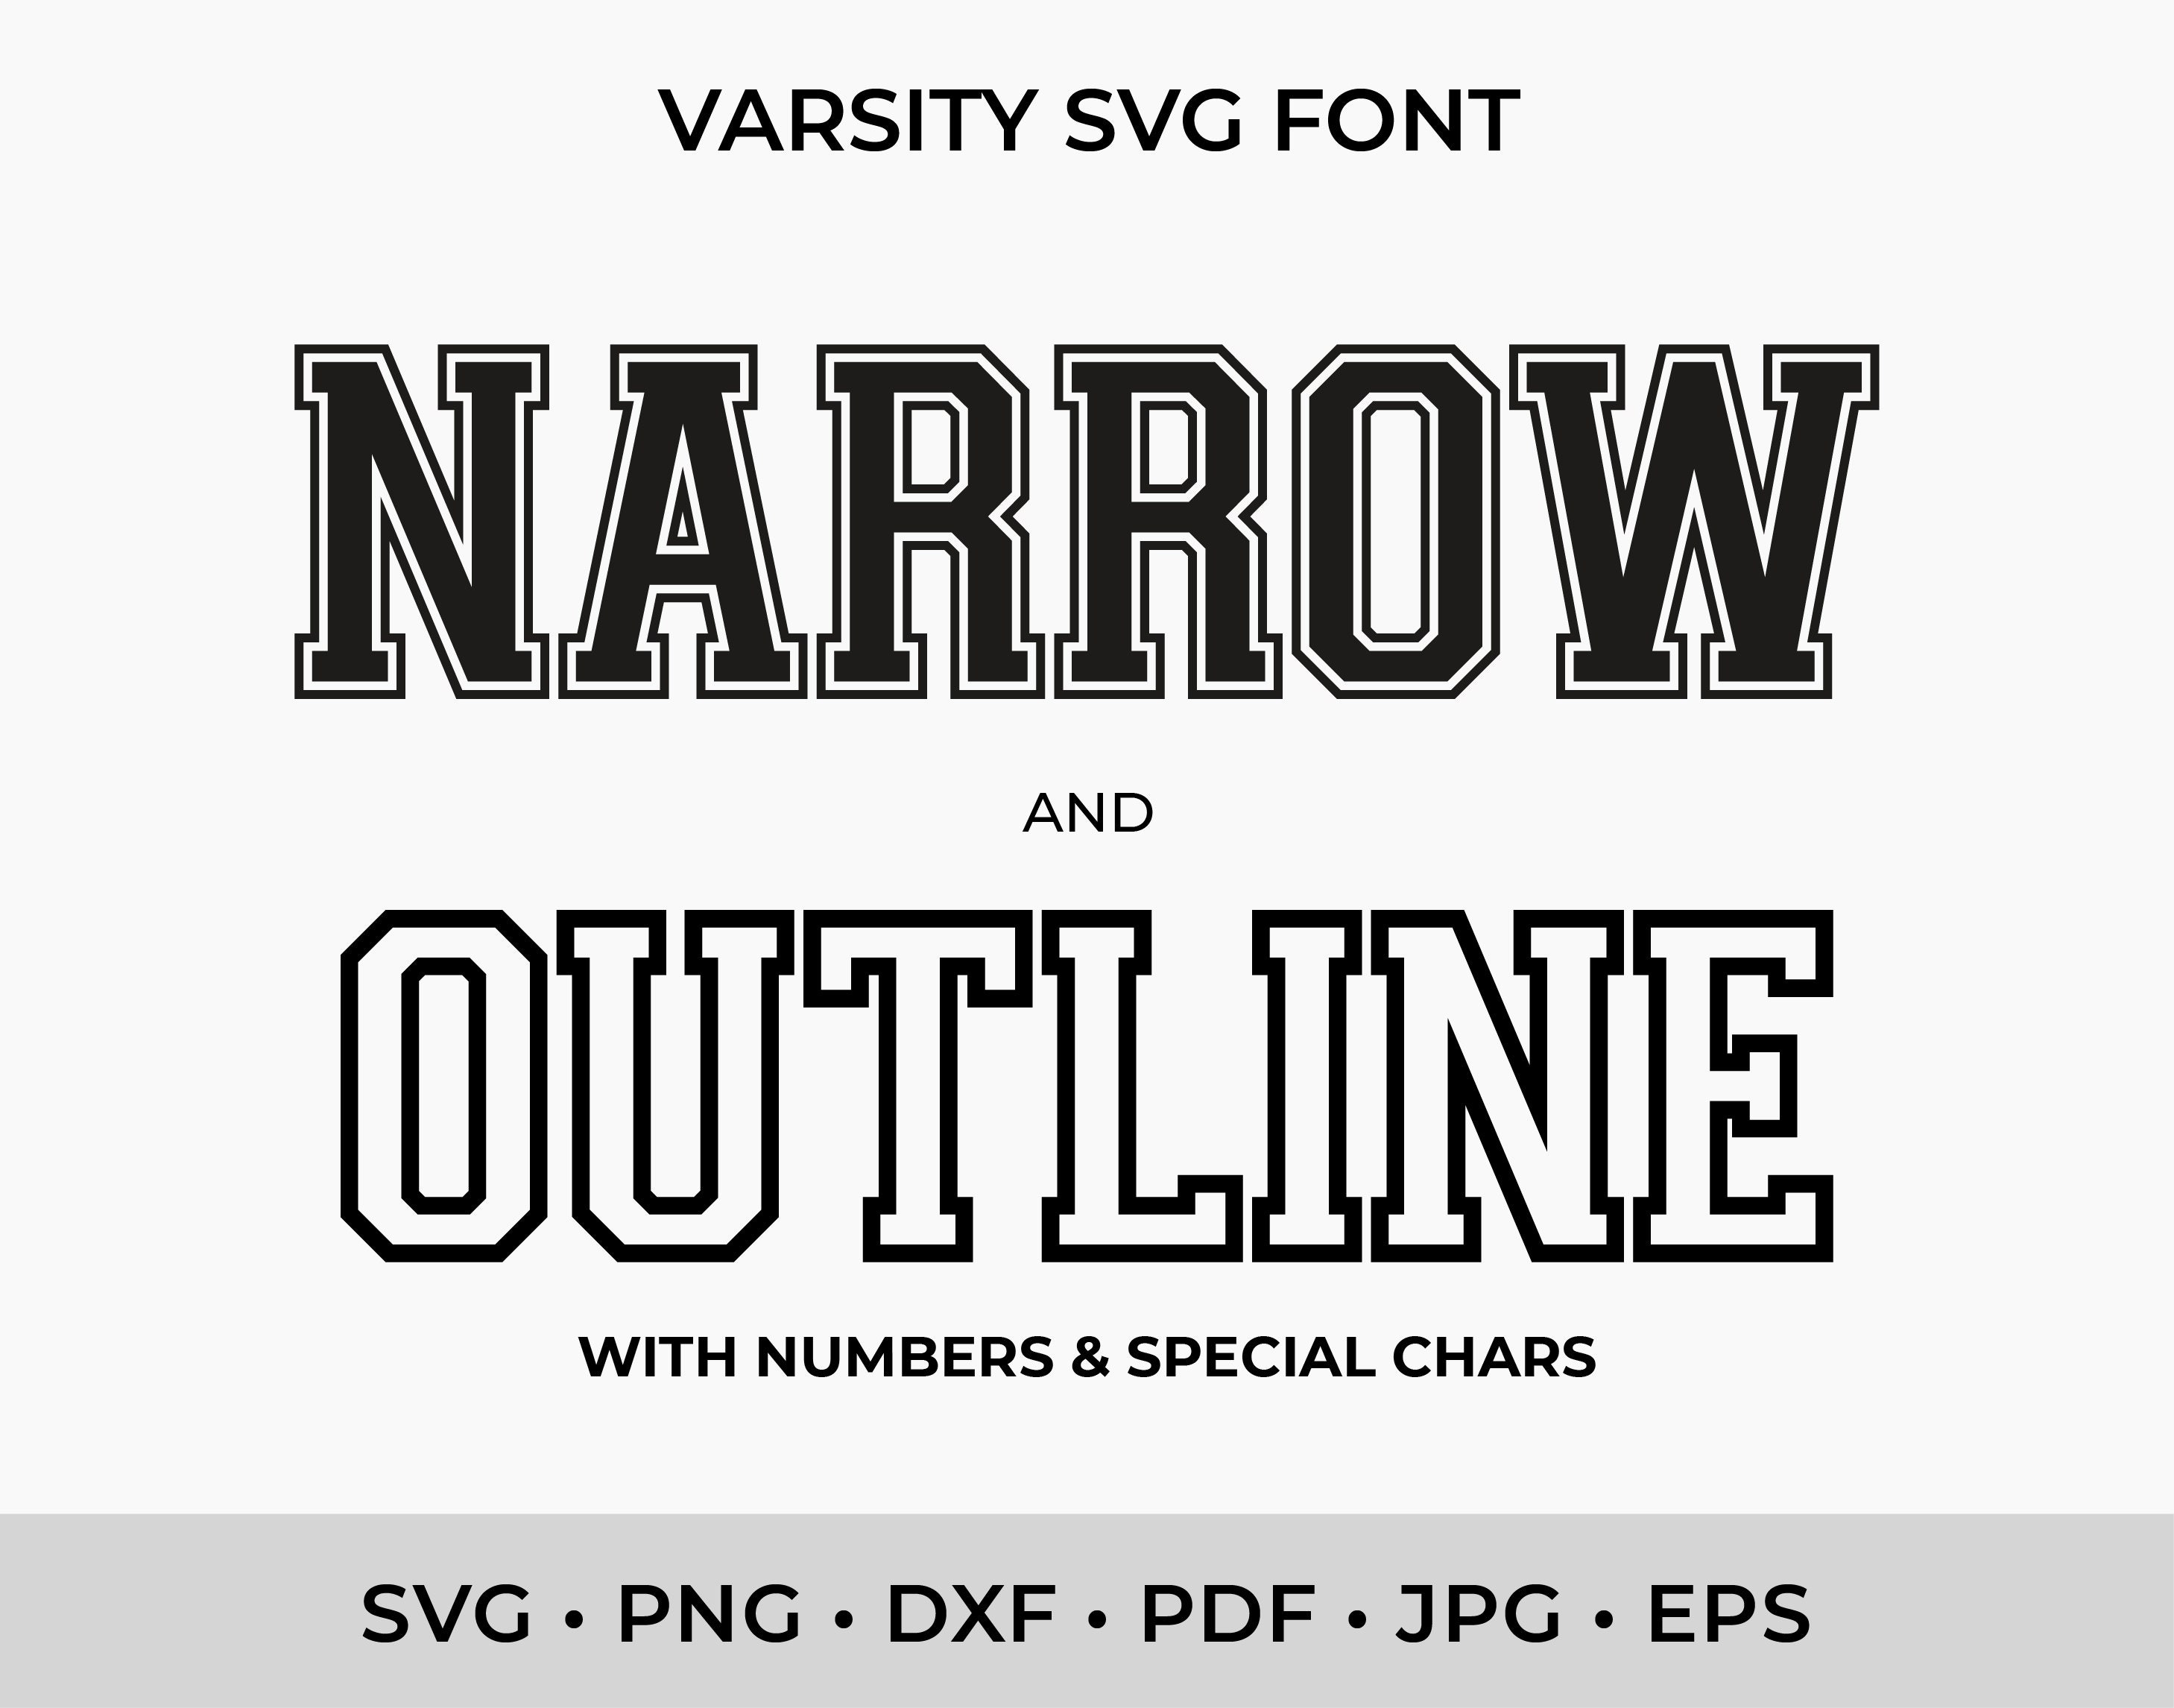 Varsity Font Letter and Number Stencil Sets Number / 1 / 10 mil medium-duty